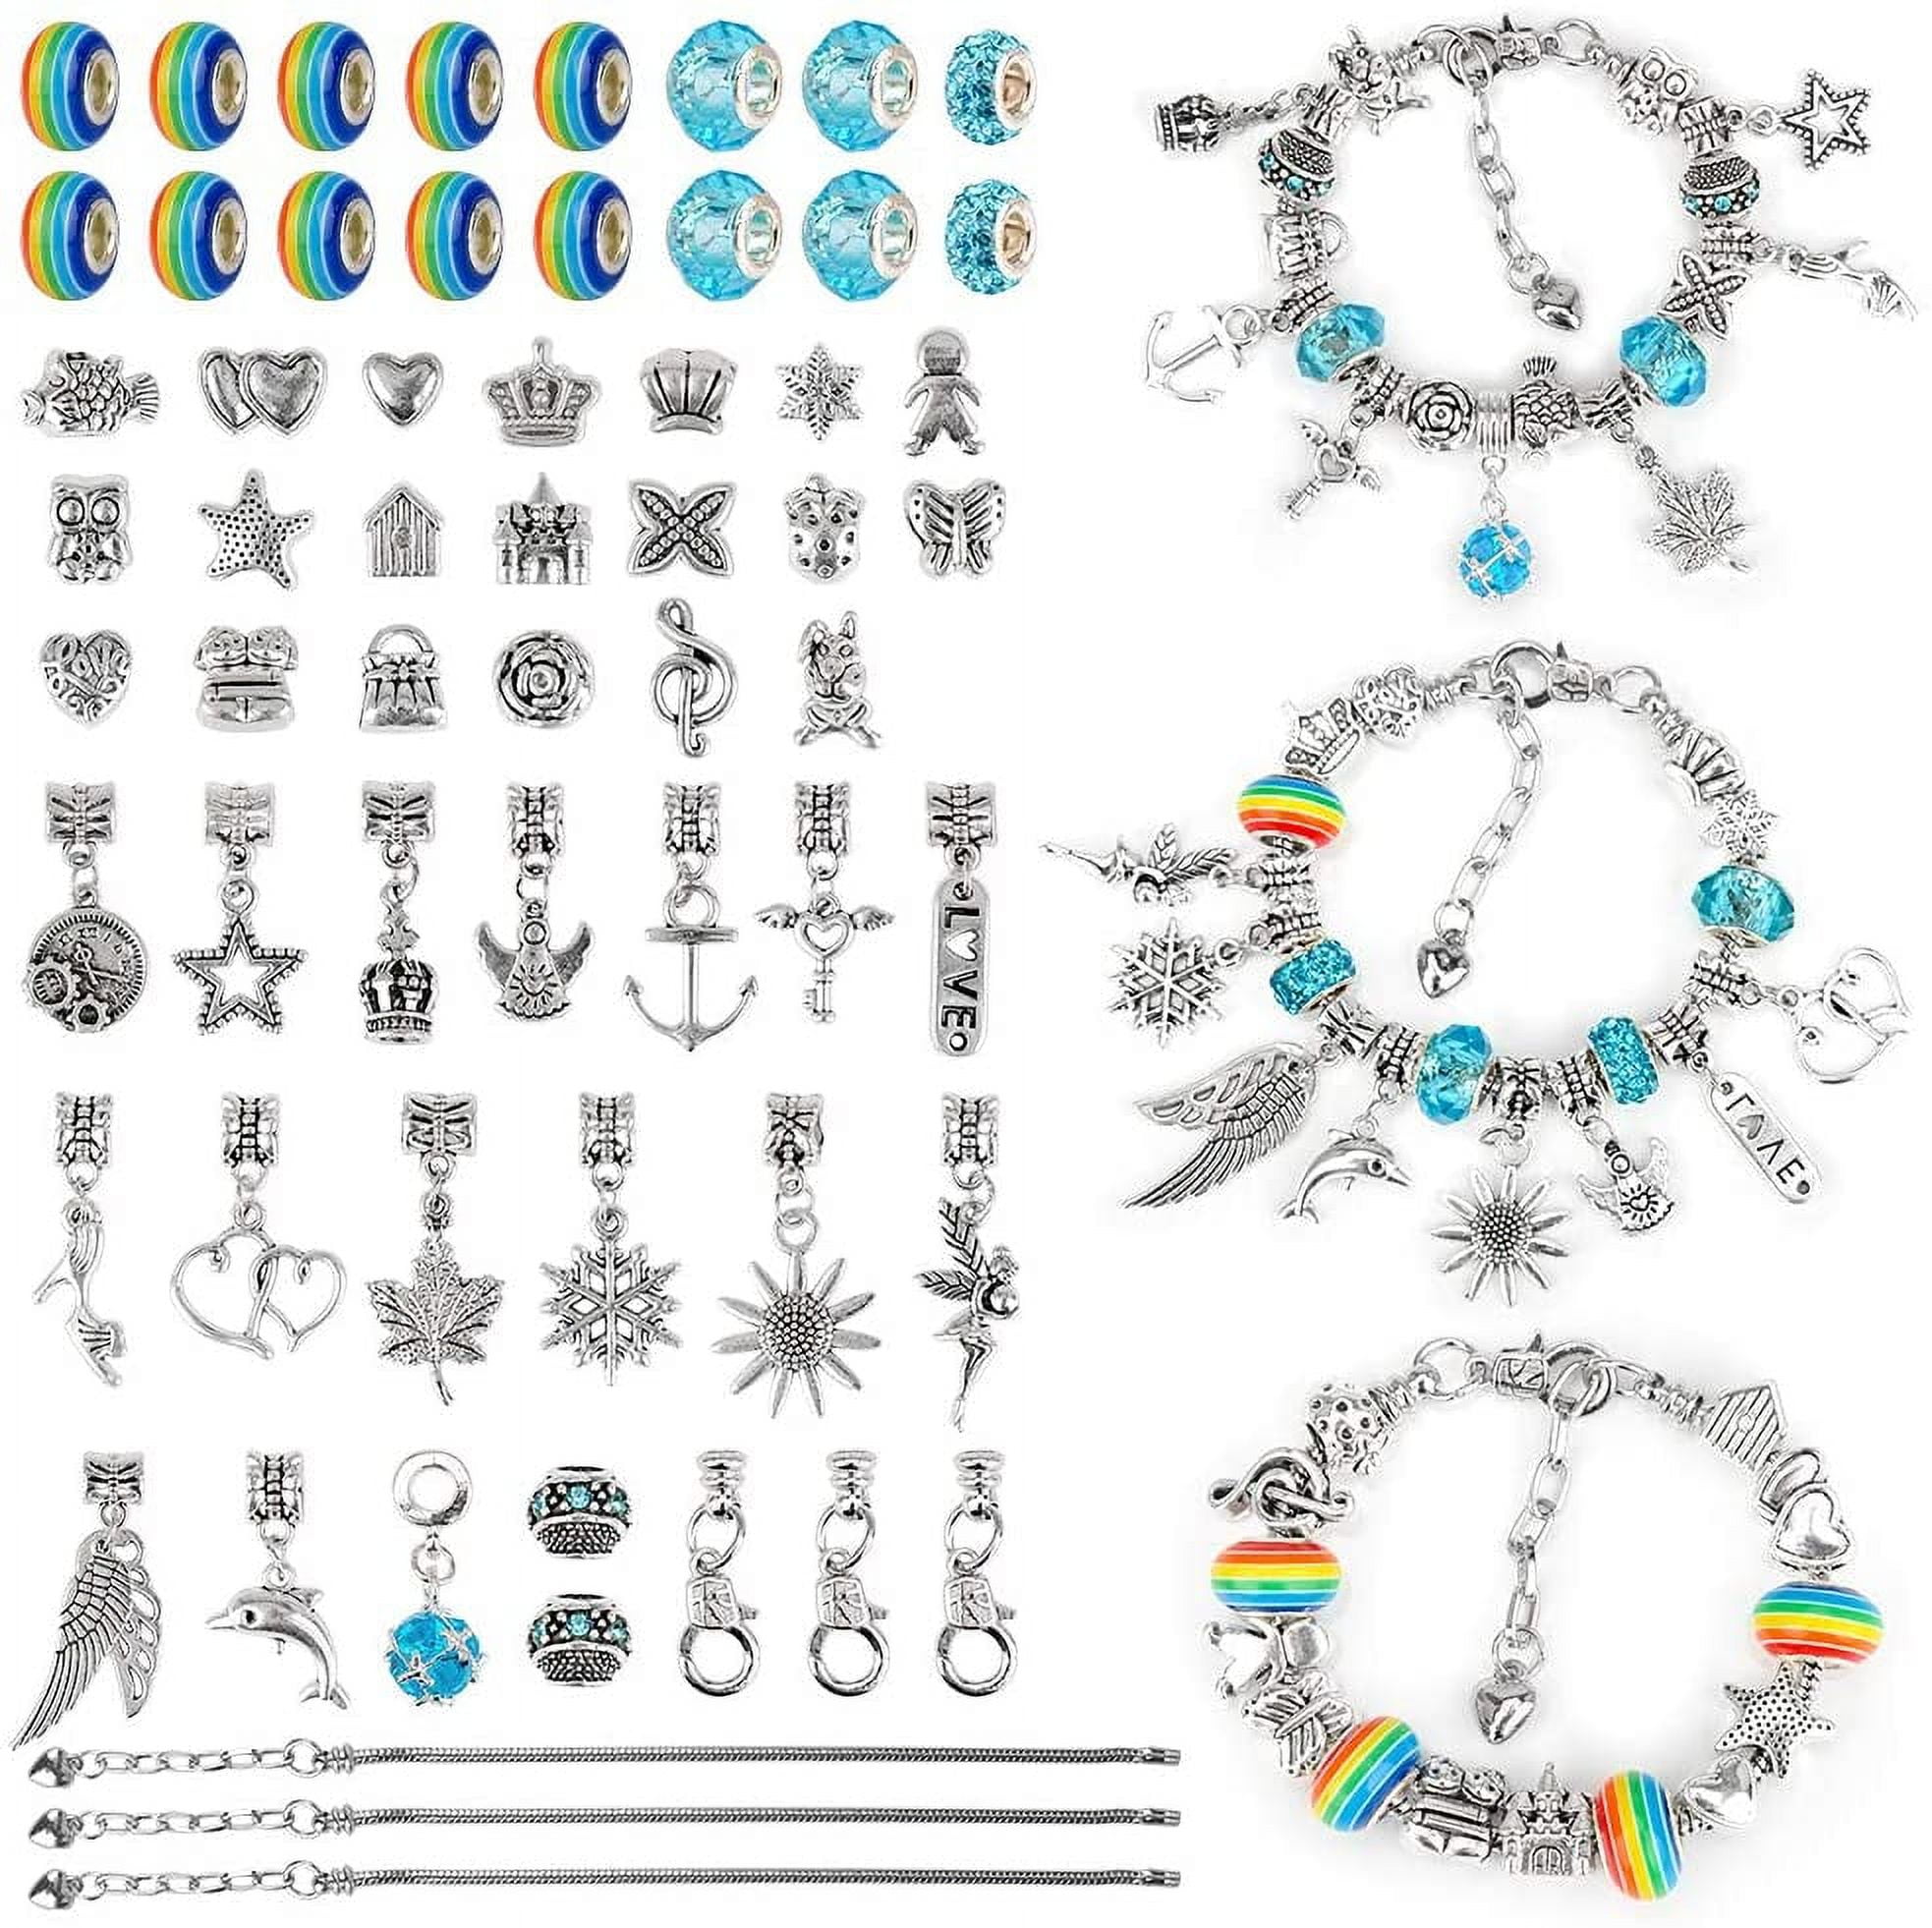 51070 - friendship-bracelets.net | Friendship bracelet patterns, Cool  friendship bracelets, Friendship bracelets designs